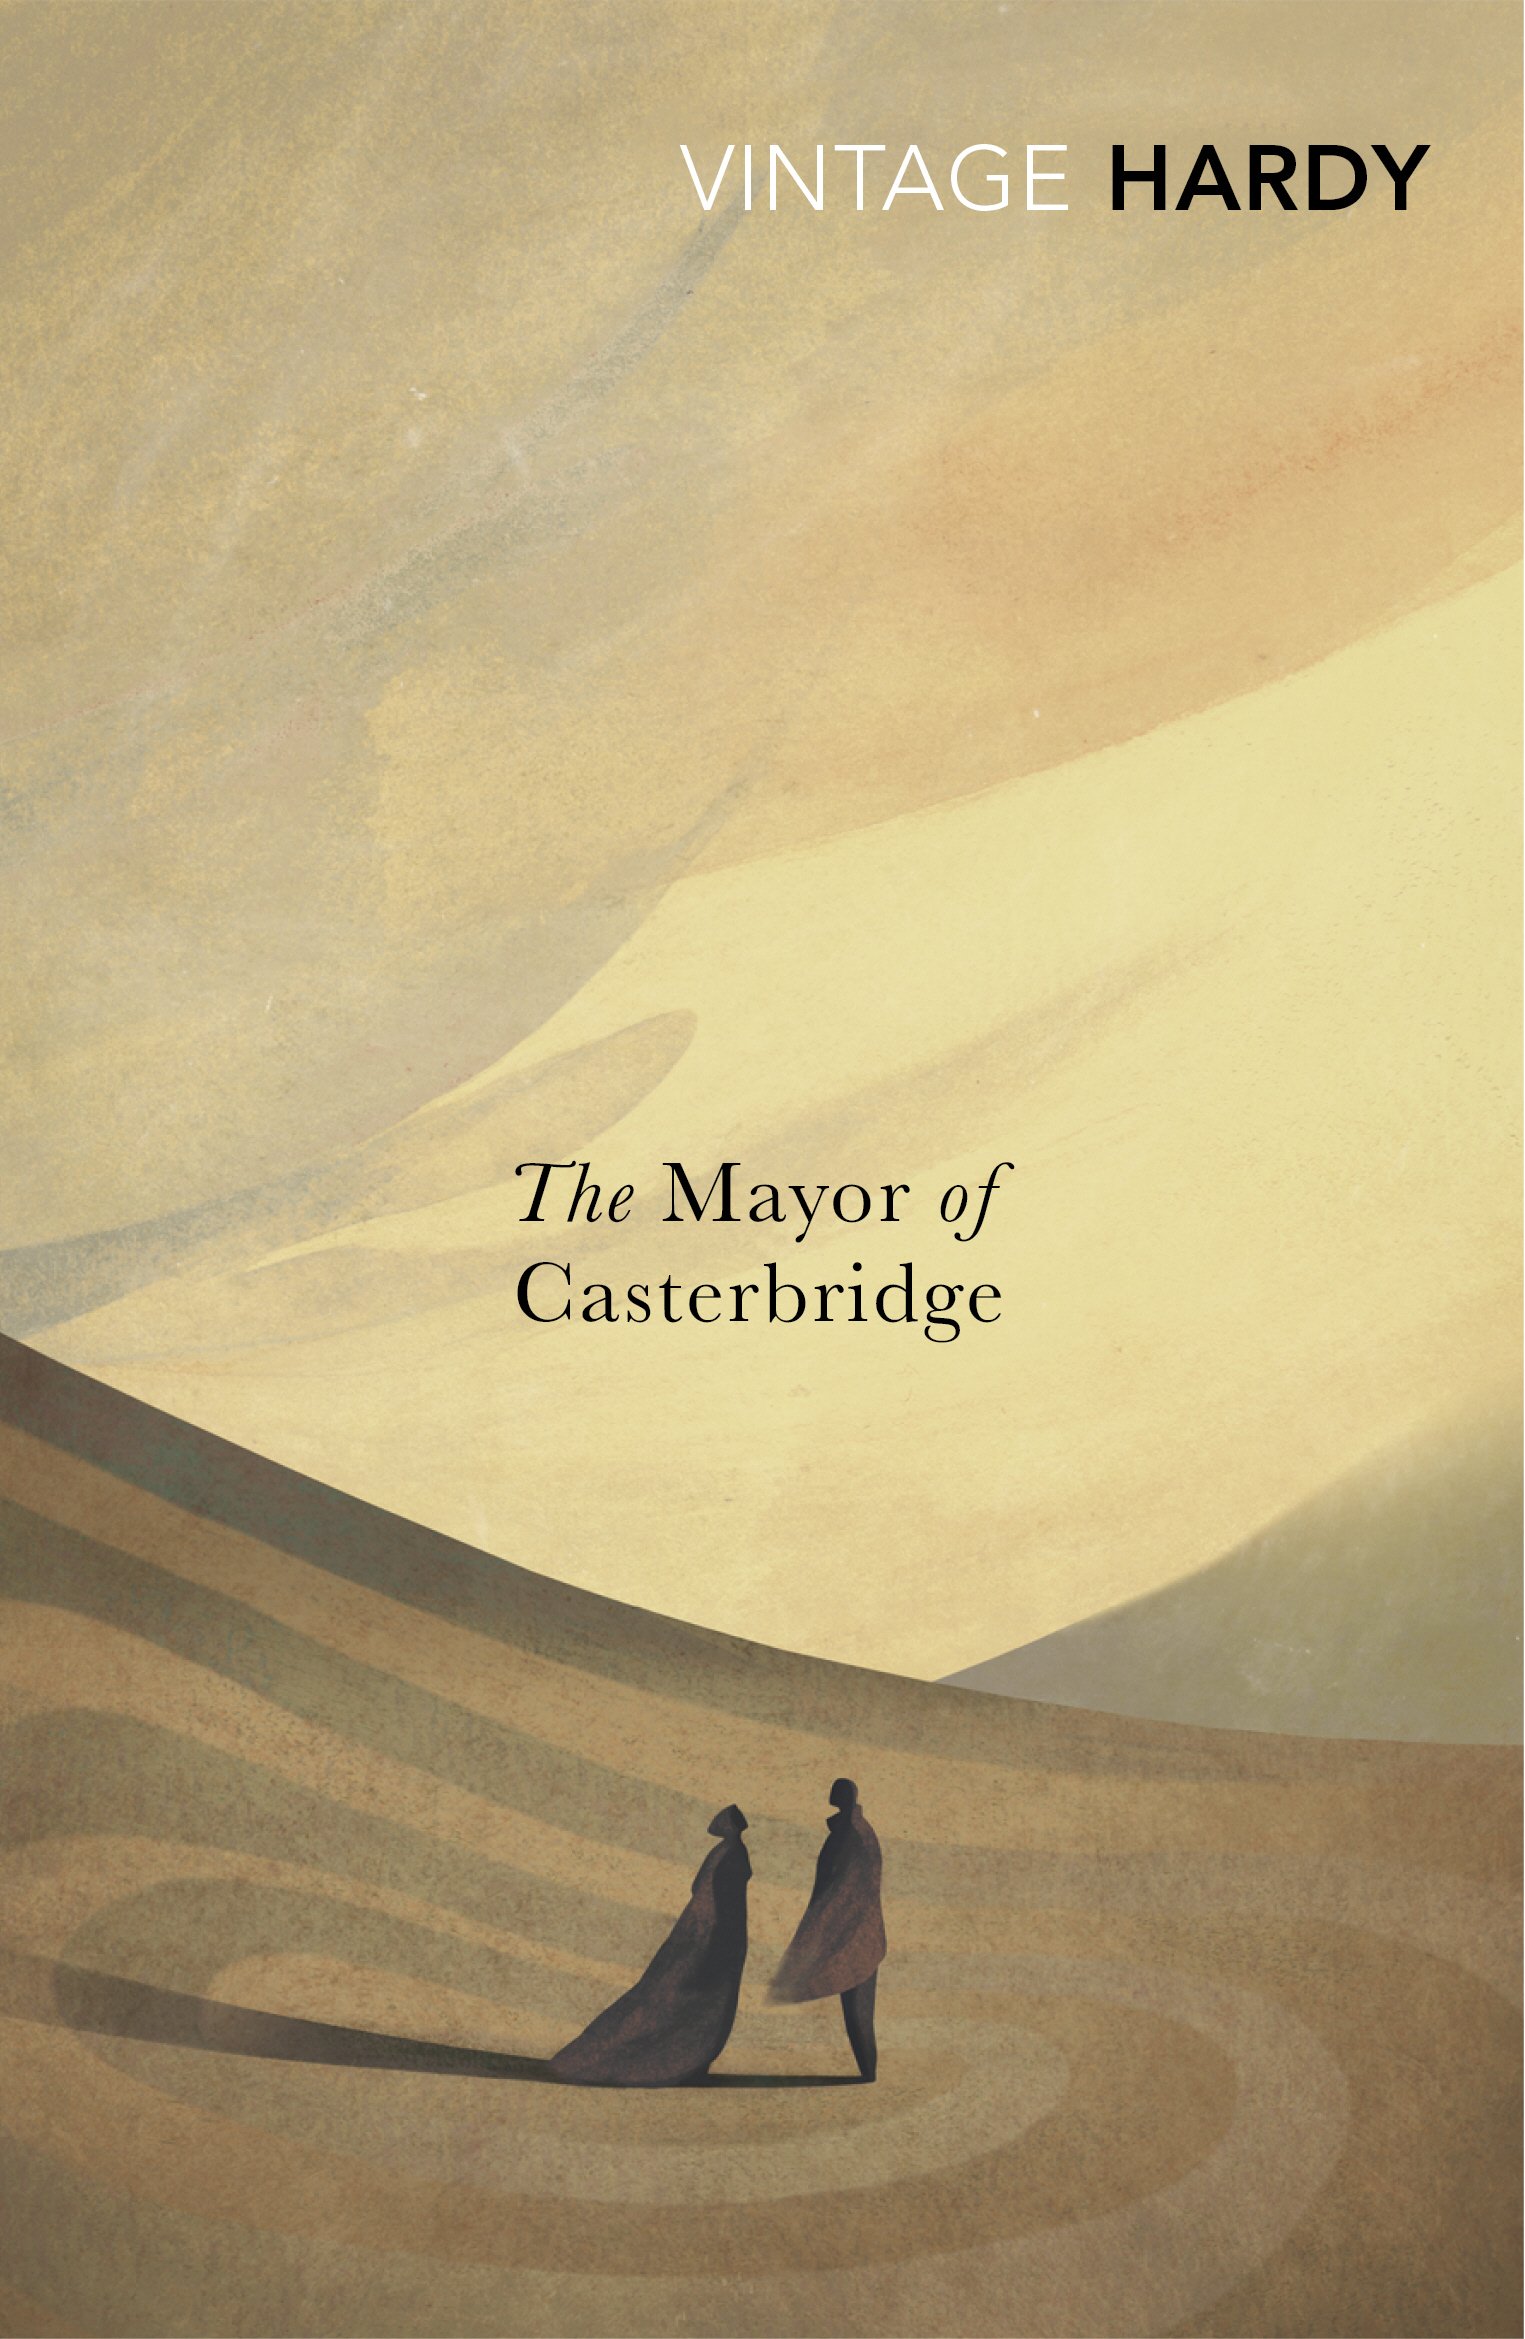 The Mayor of Casterbridge - Thomas Hardy and Lucy Hughes-Hallett